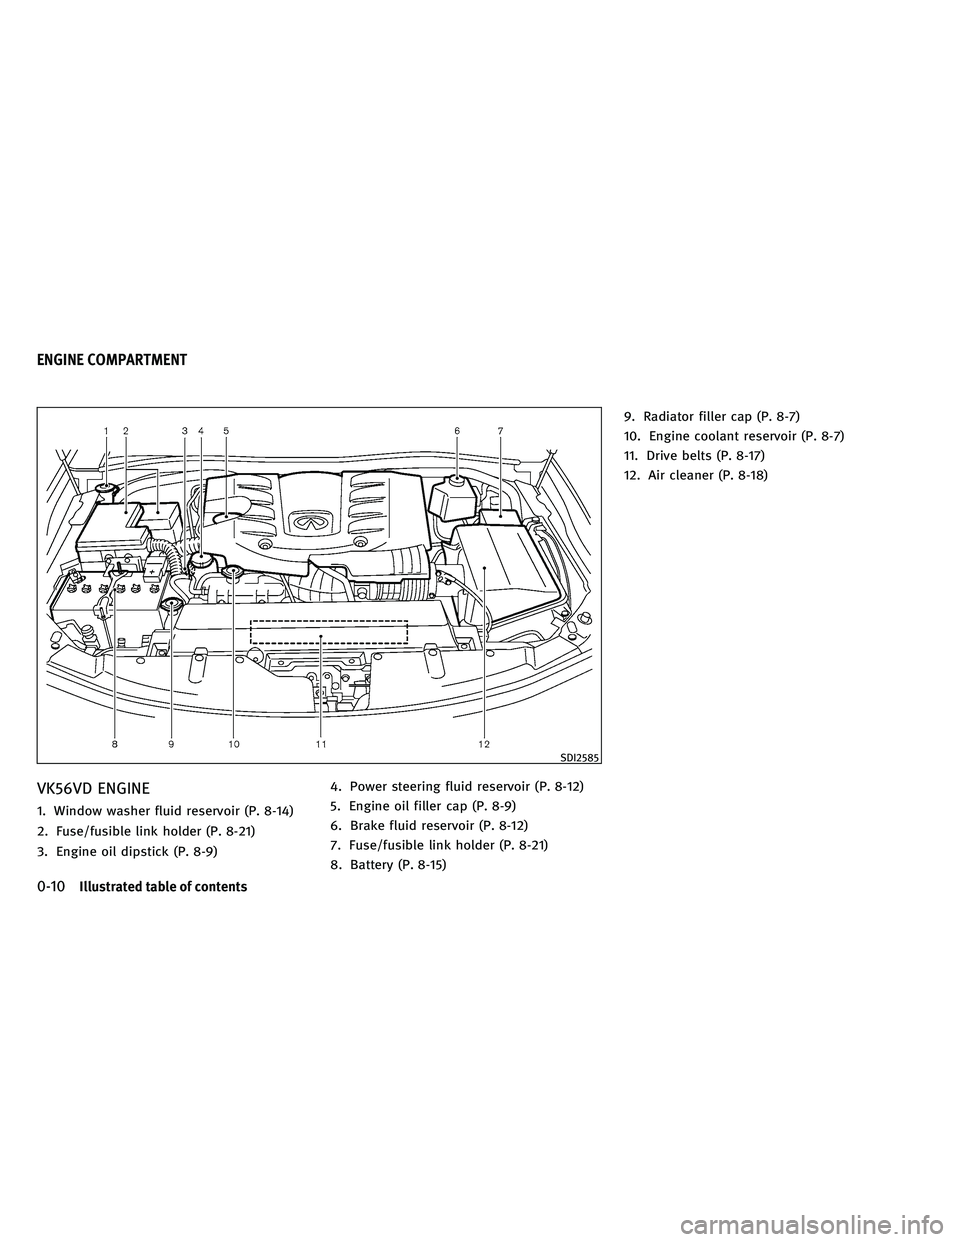 INFINITI QX 2011  Owners Manual VK56VD ENGINE
1. Window washer fluid reservoir (P. 8-14)
2. Fuse/fusible link holder (P. 8-21)
3. Engine oil dipstick (P. 8-9)4. Power steering fluid reservoir (P. 8-12)
5. Engine oil filler cap (P. 8